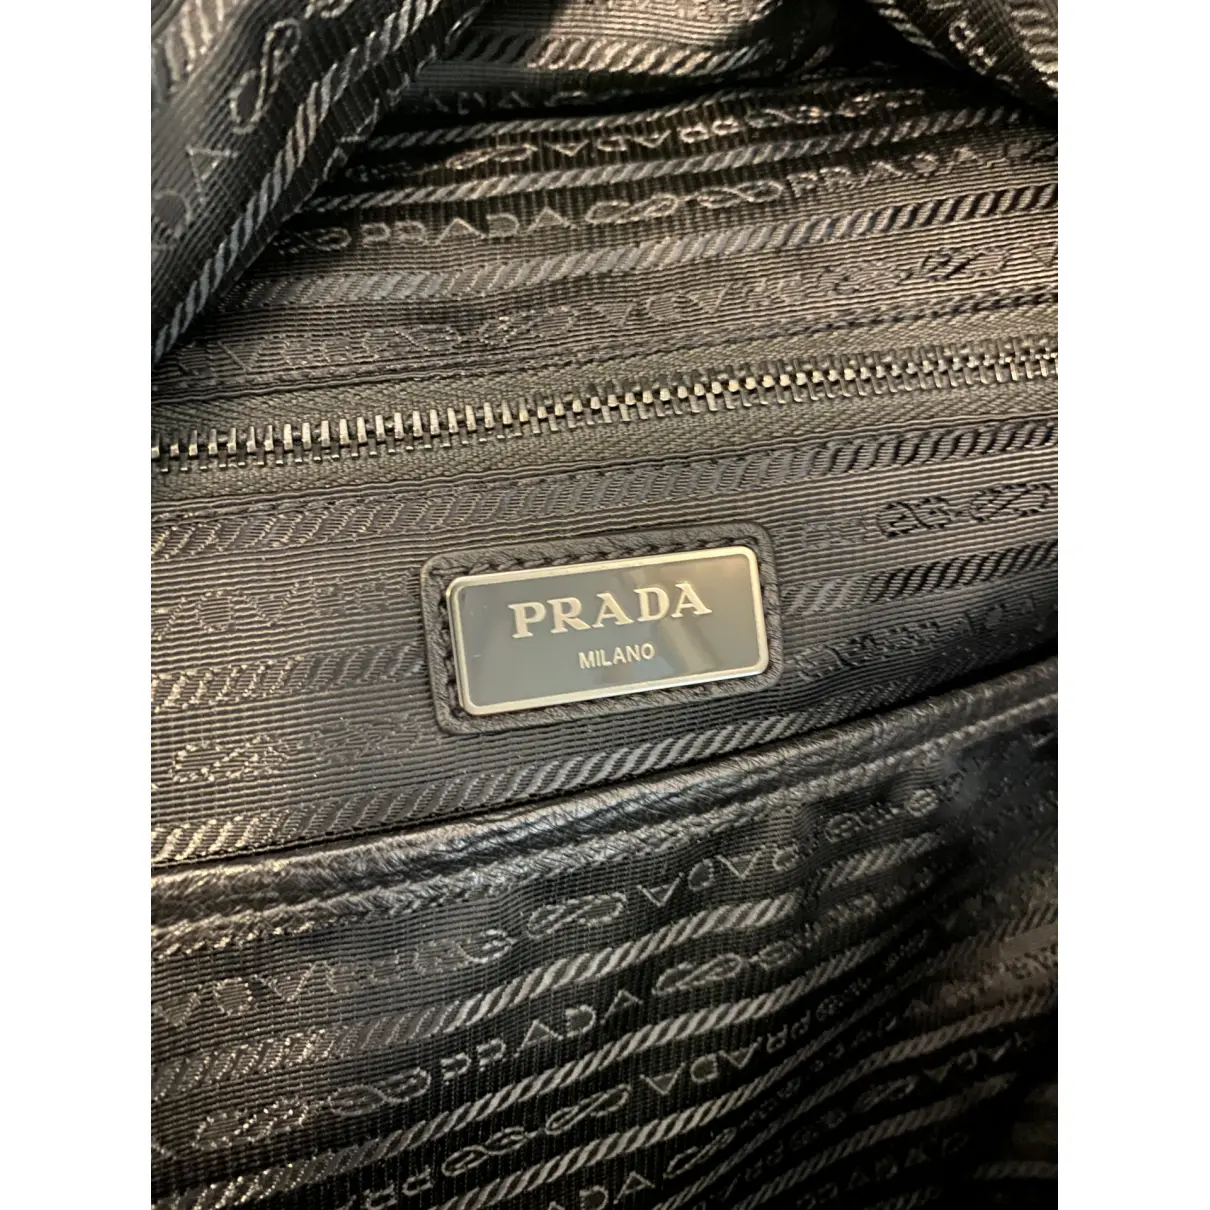 Ostrich travel bag Prada